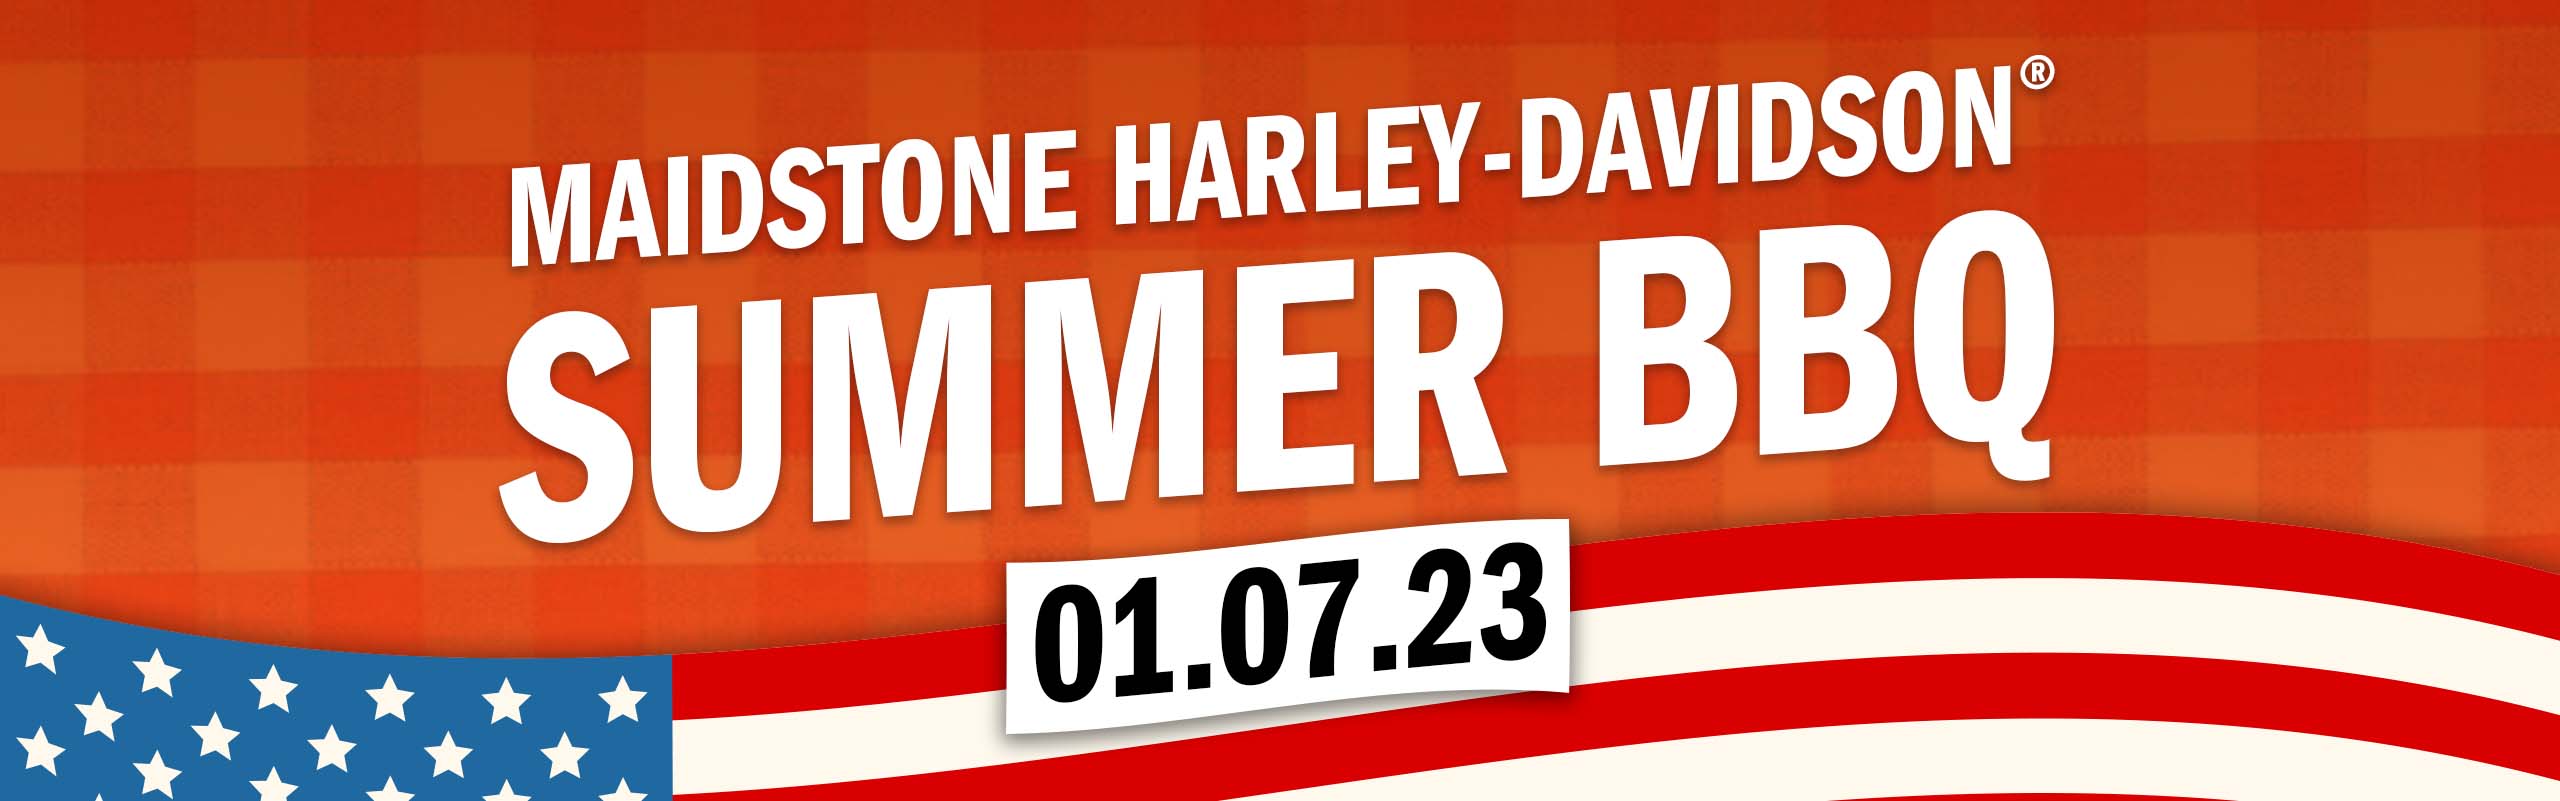 Maidstone Harley-Davidson's 1st July Summer BBQ